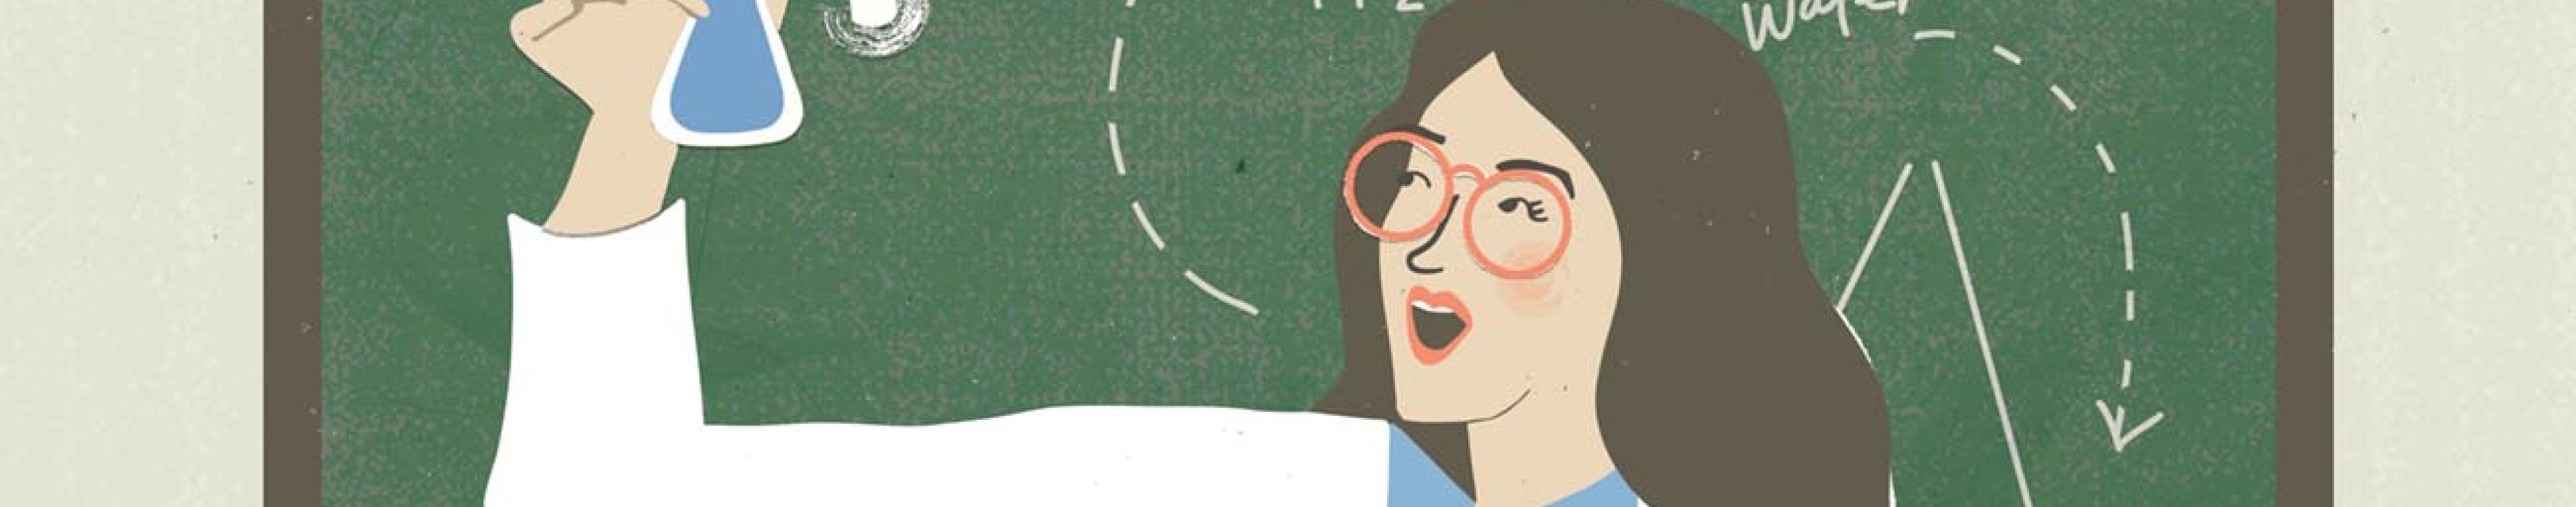 Illustration of a female science teacher